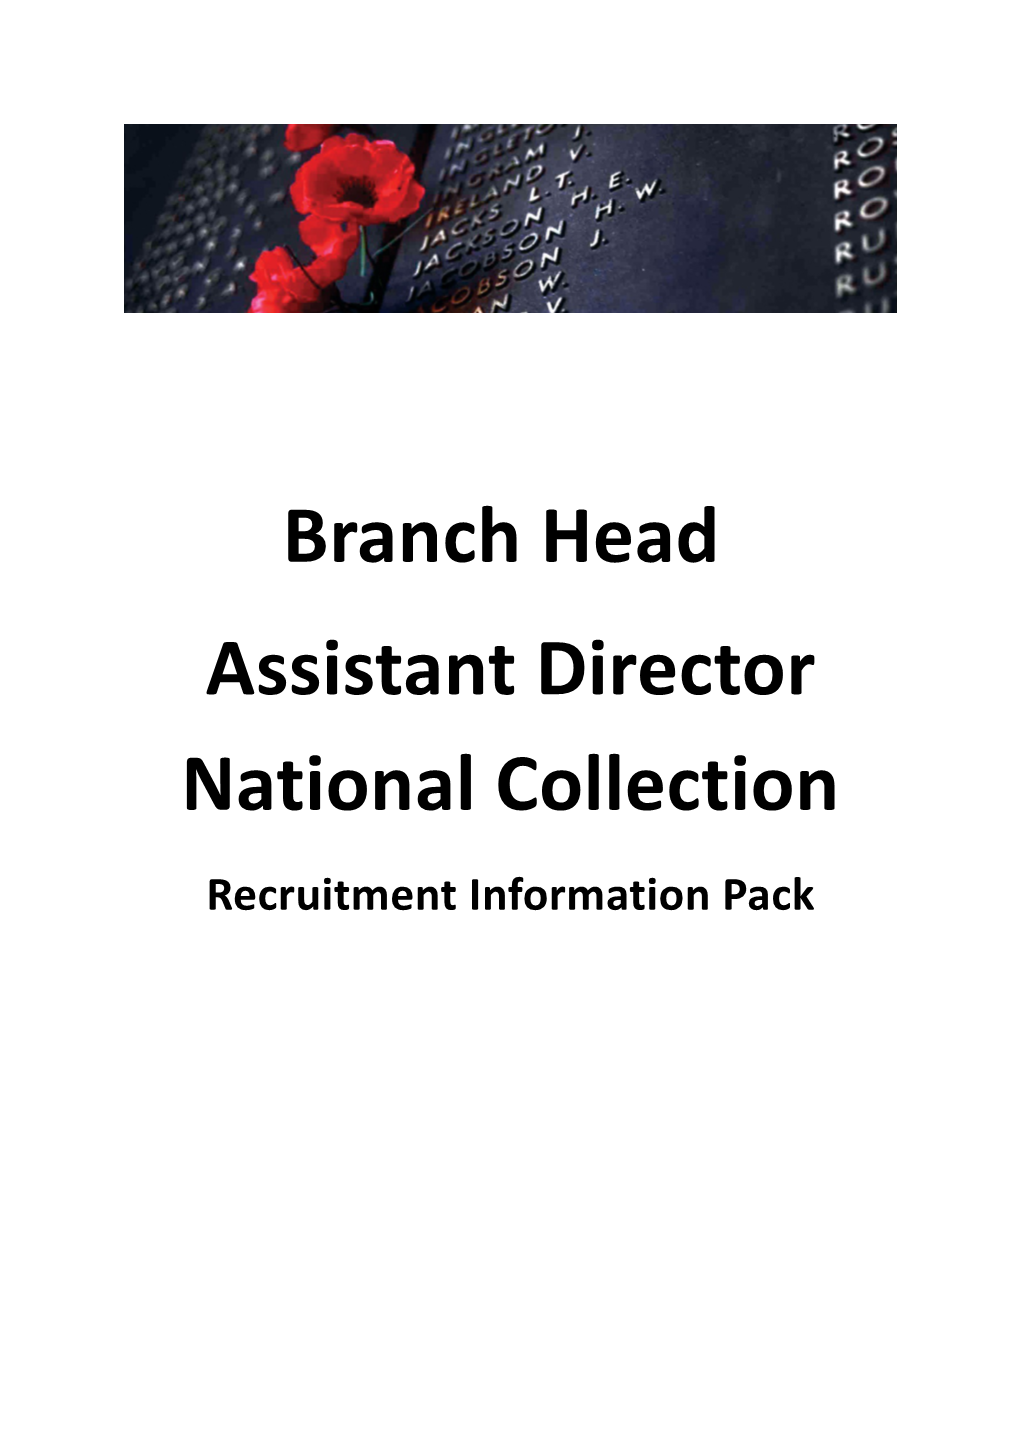 Recruitment Information Pack - ADNC